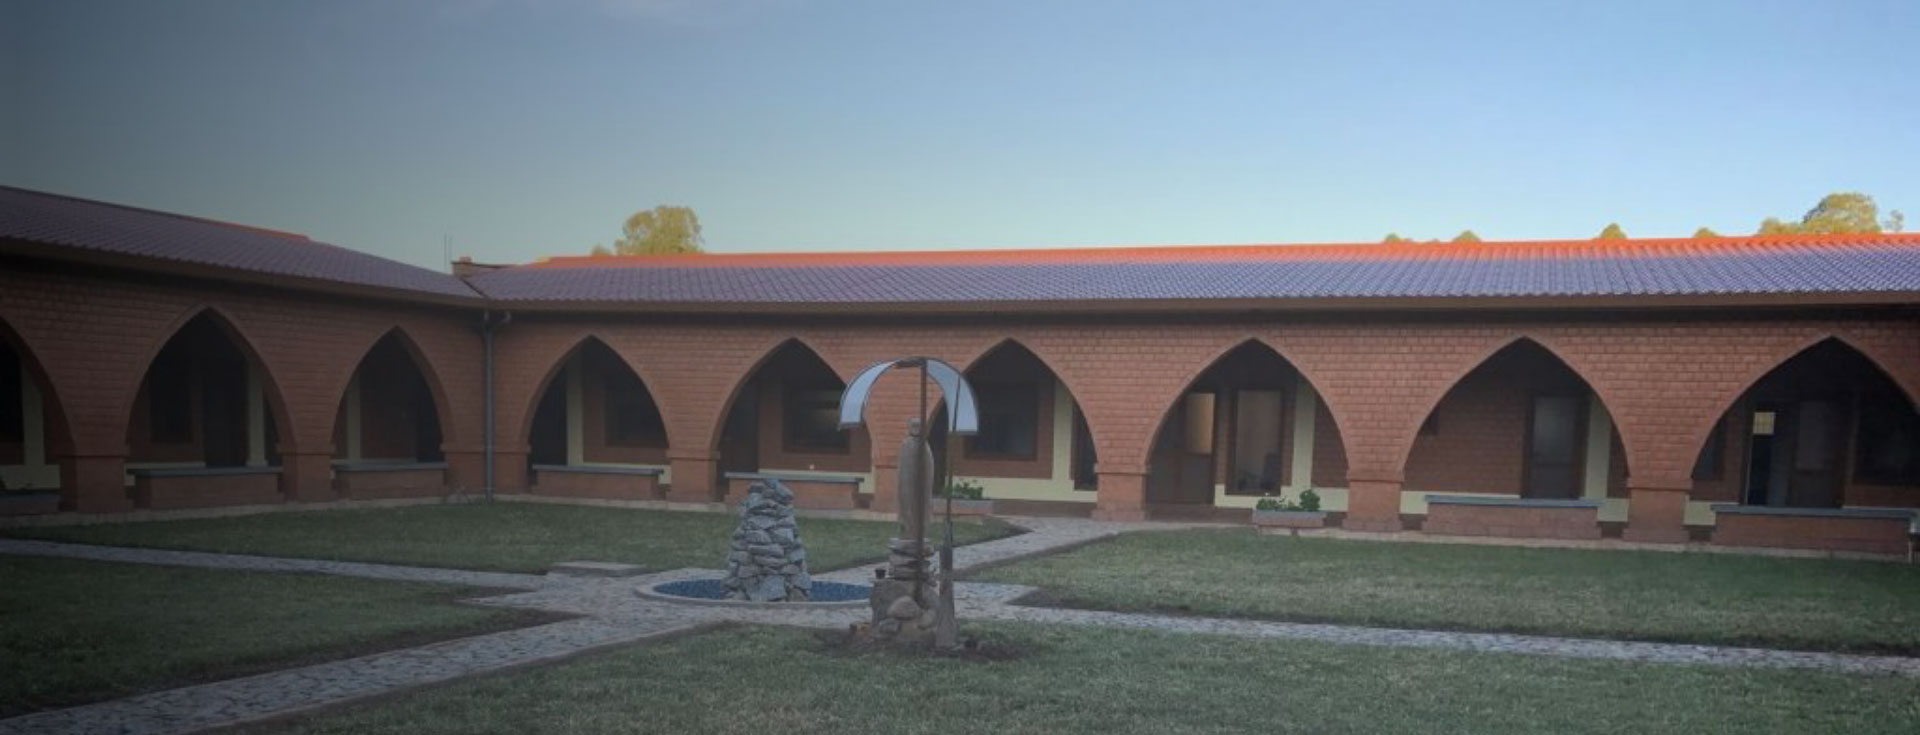 Trappist Sisters Chapel in Angola , Caritas Pro Vitae Gradu, Charitable Trust, Fundraising Catholic NGOs, Ariane Slinger